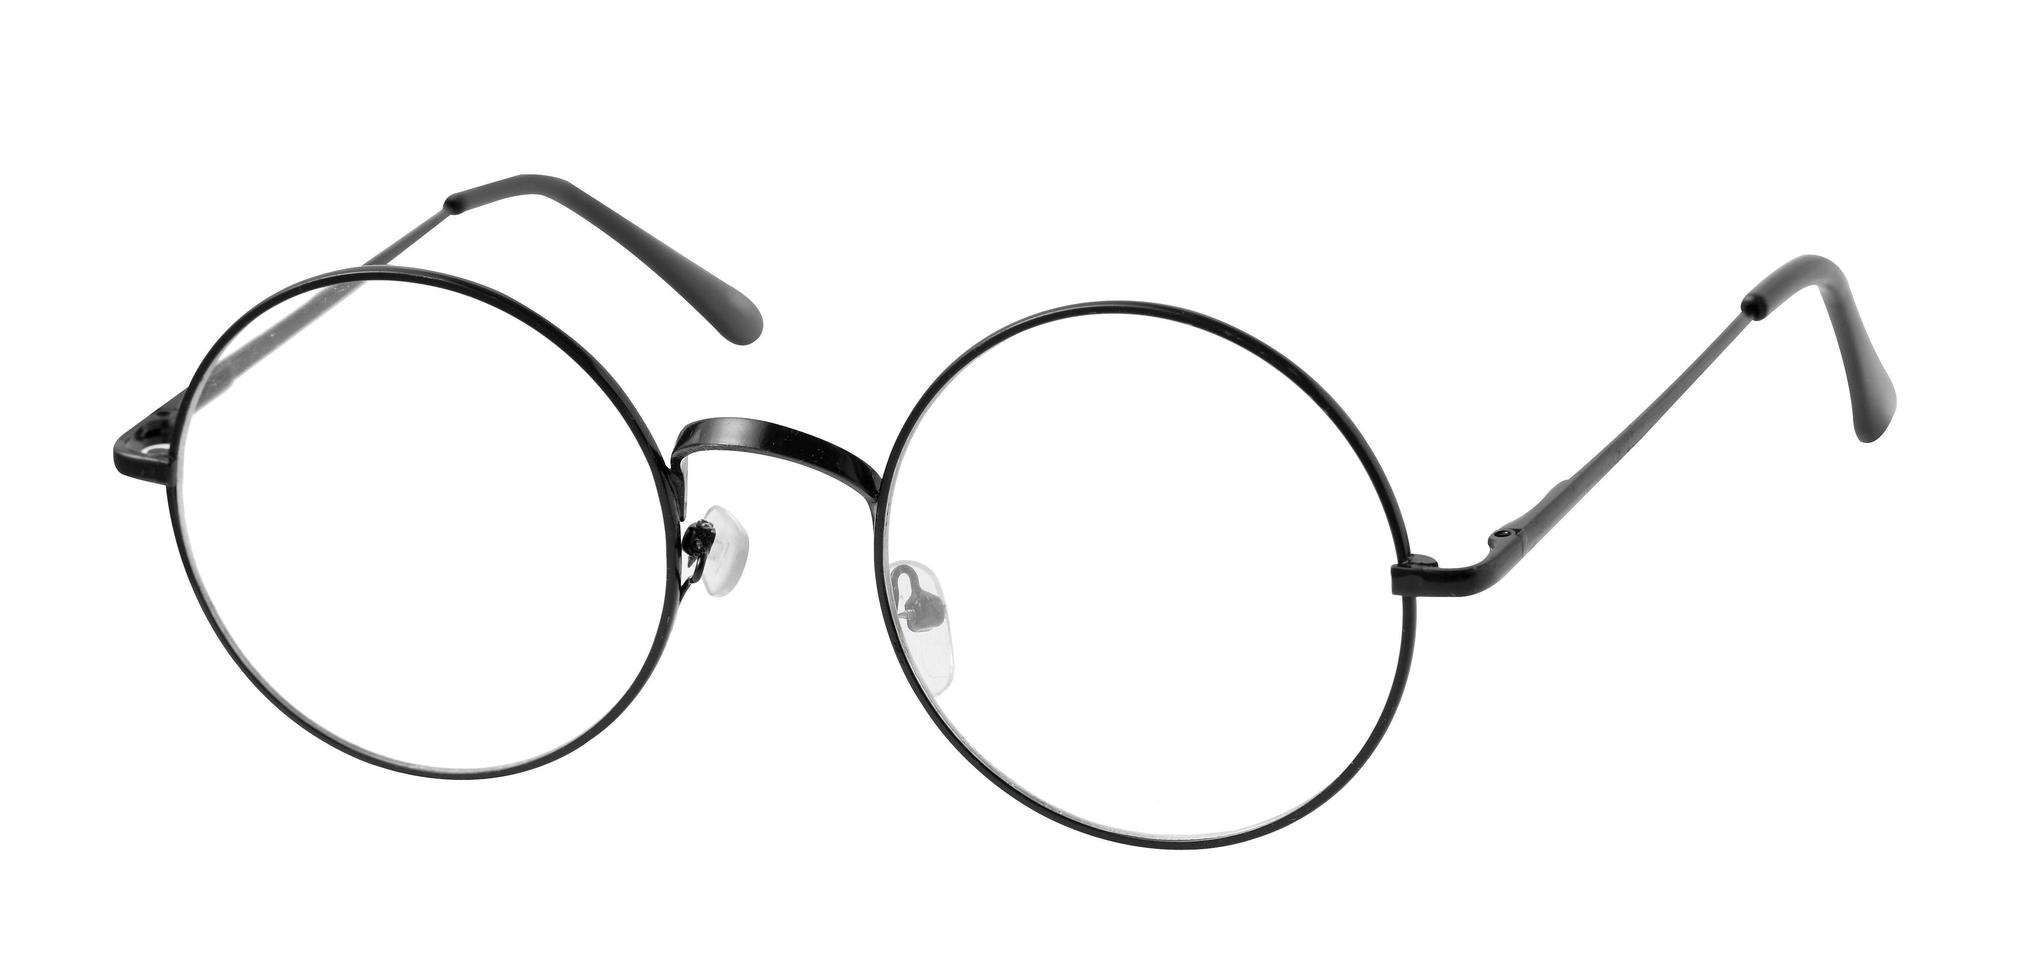 vintage bril op witte achtergrond foto